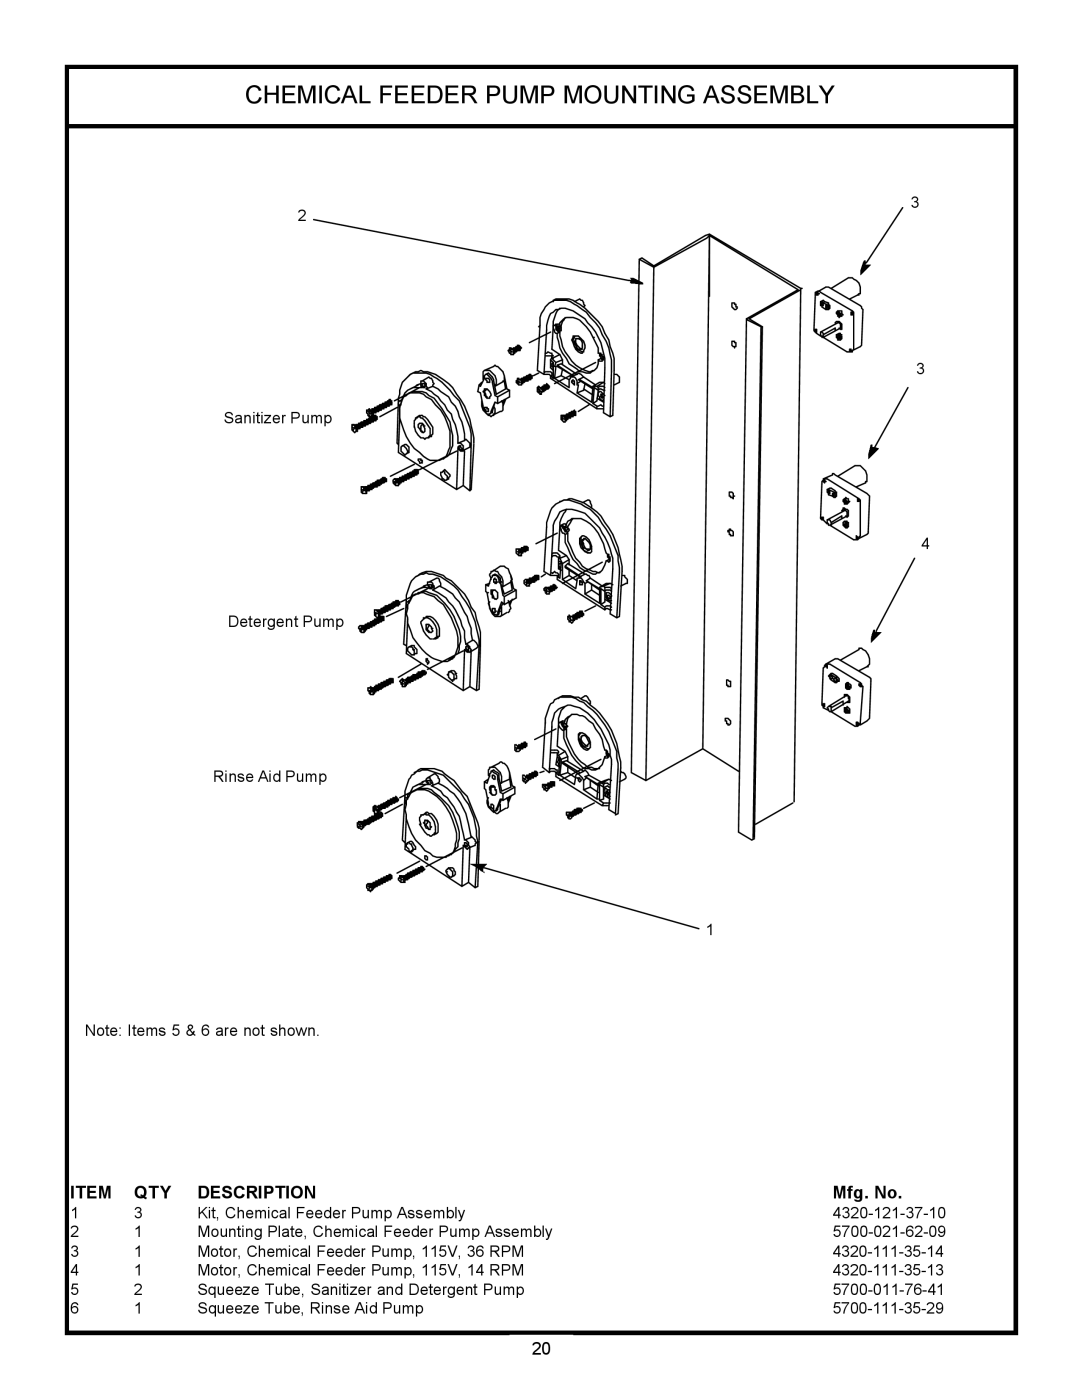 Jackson 24LTP, 24 LT technical manual Chemical Feeder Pump Mounting Assembly, Description, Mfg. No 